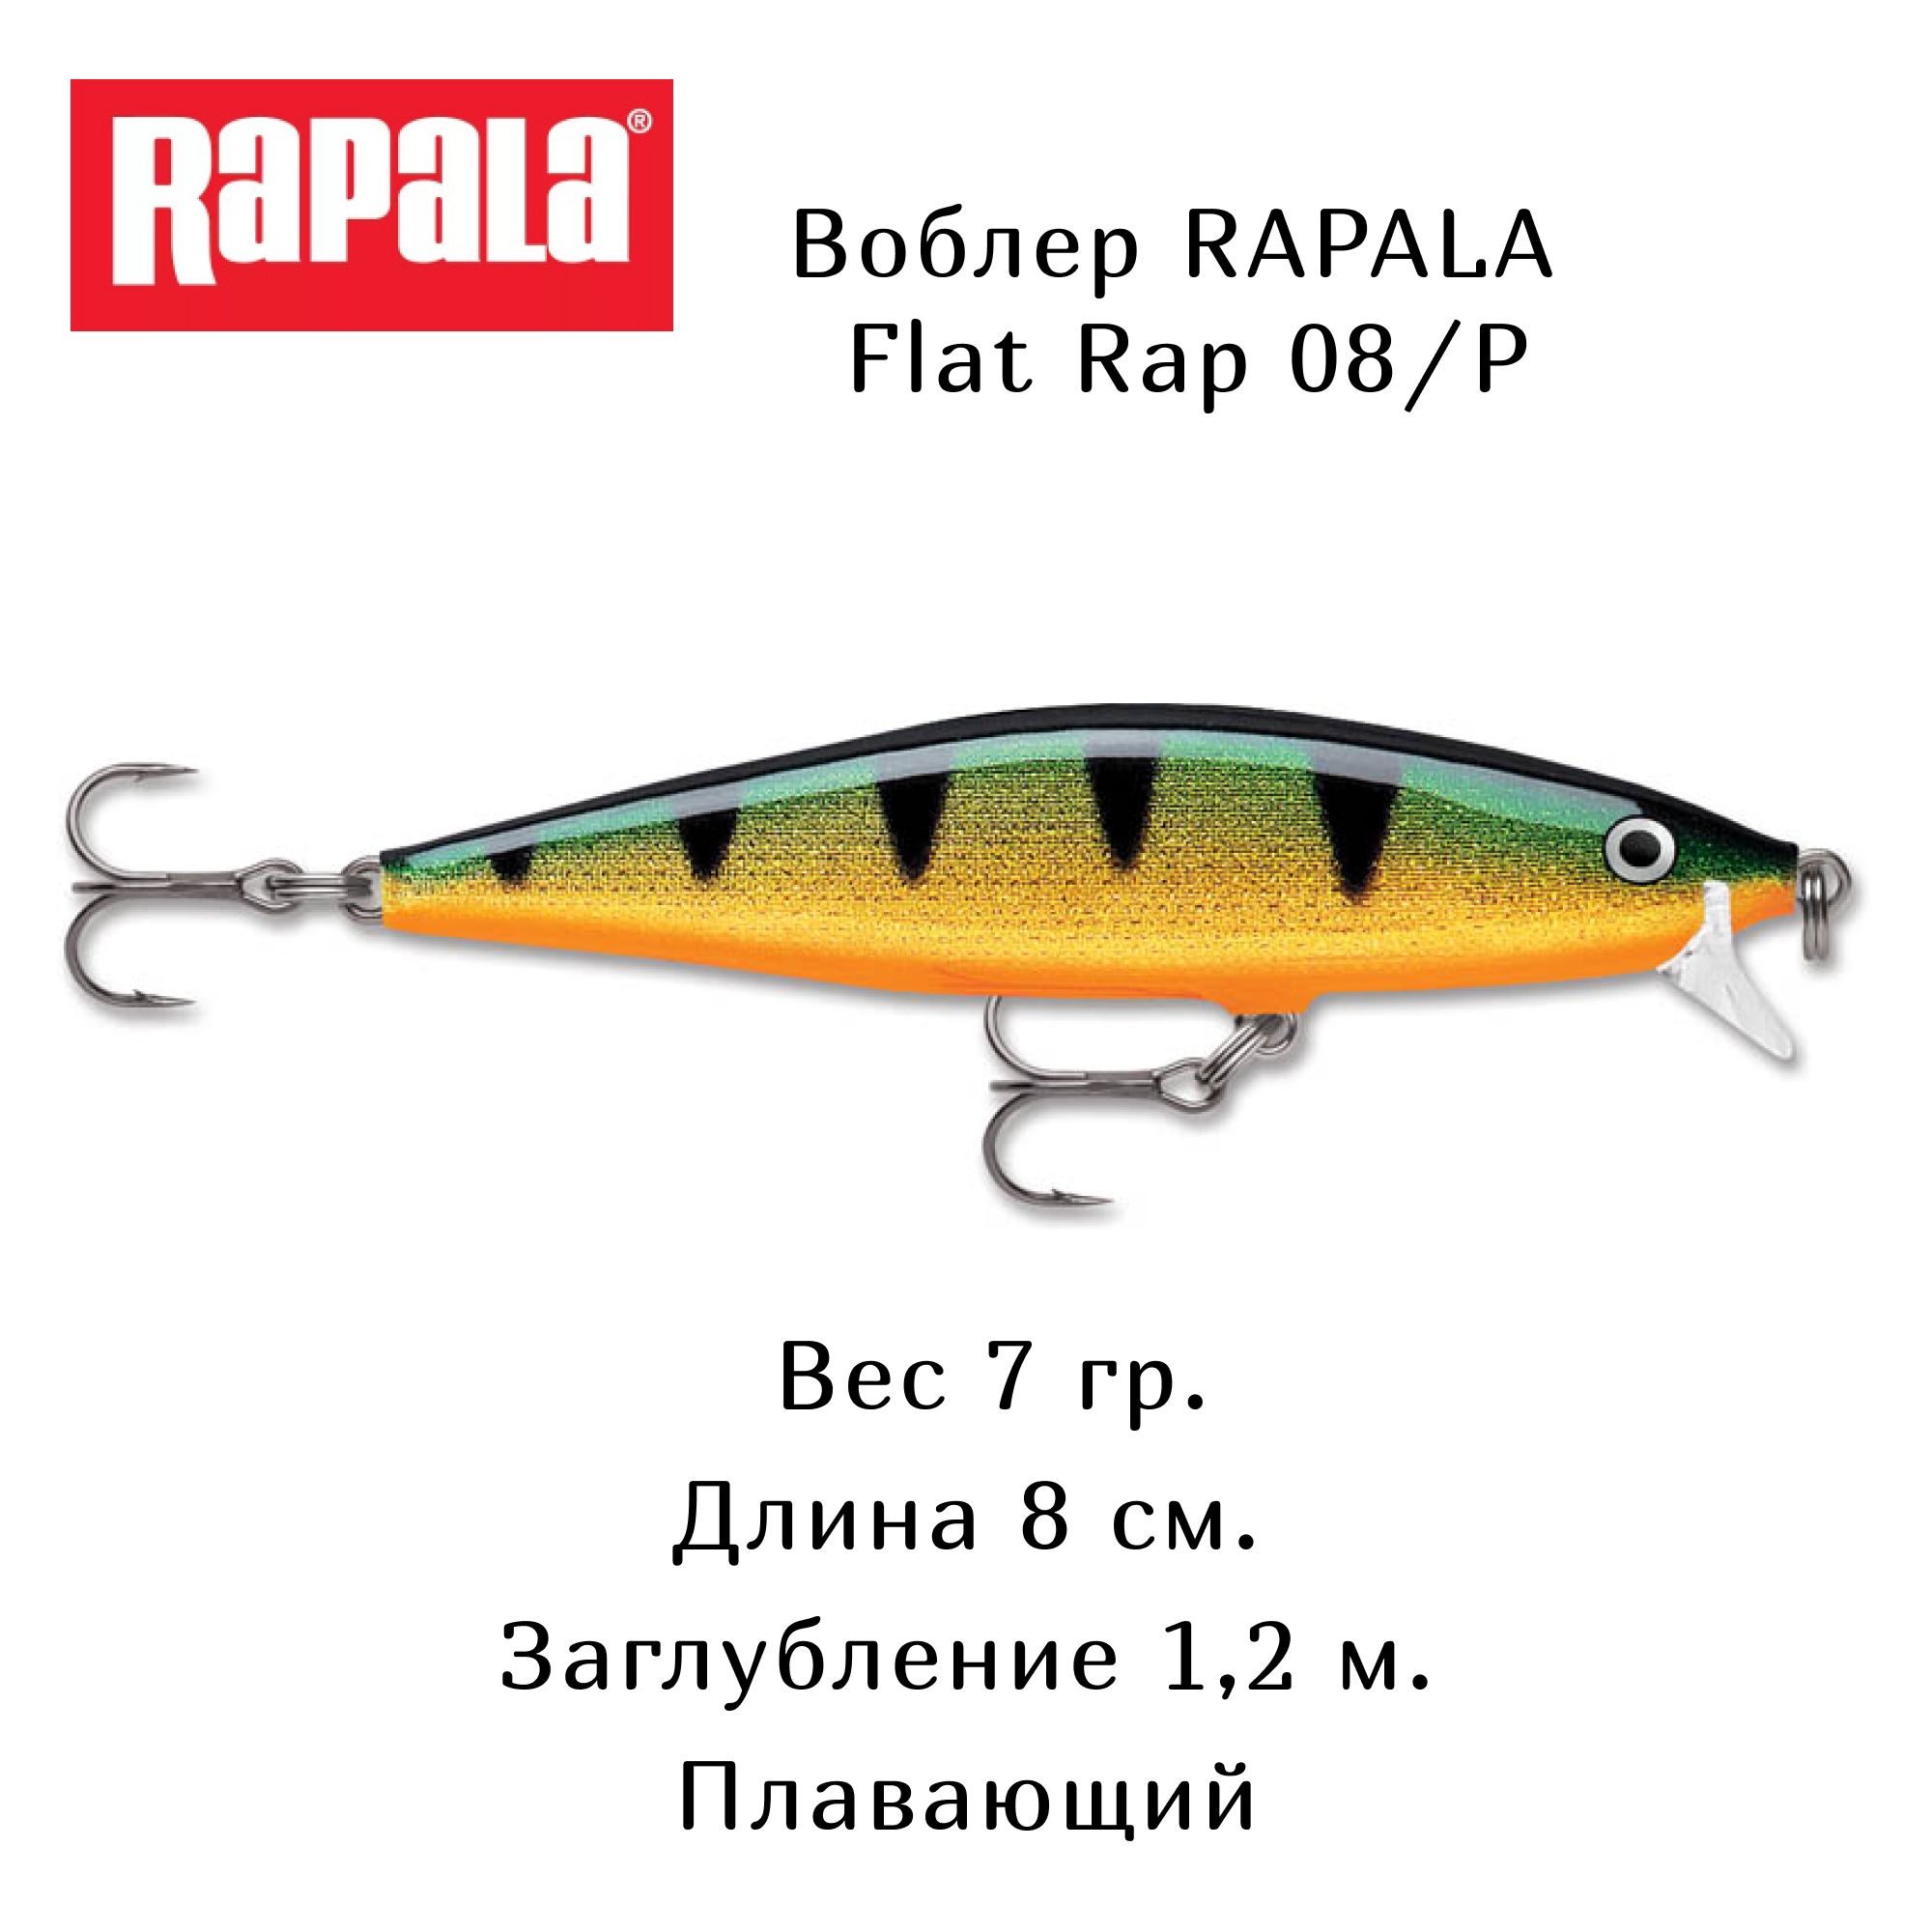 Воблеры flat. Воблер Rapala Flat Rap 08 /p /плавающий/ 0,9-1,8м, 8см, 7гр. Rapala Flat Rap flr06-ft. Rapala Flat Rap flr16-ft.